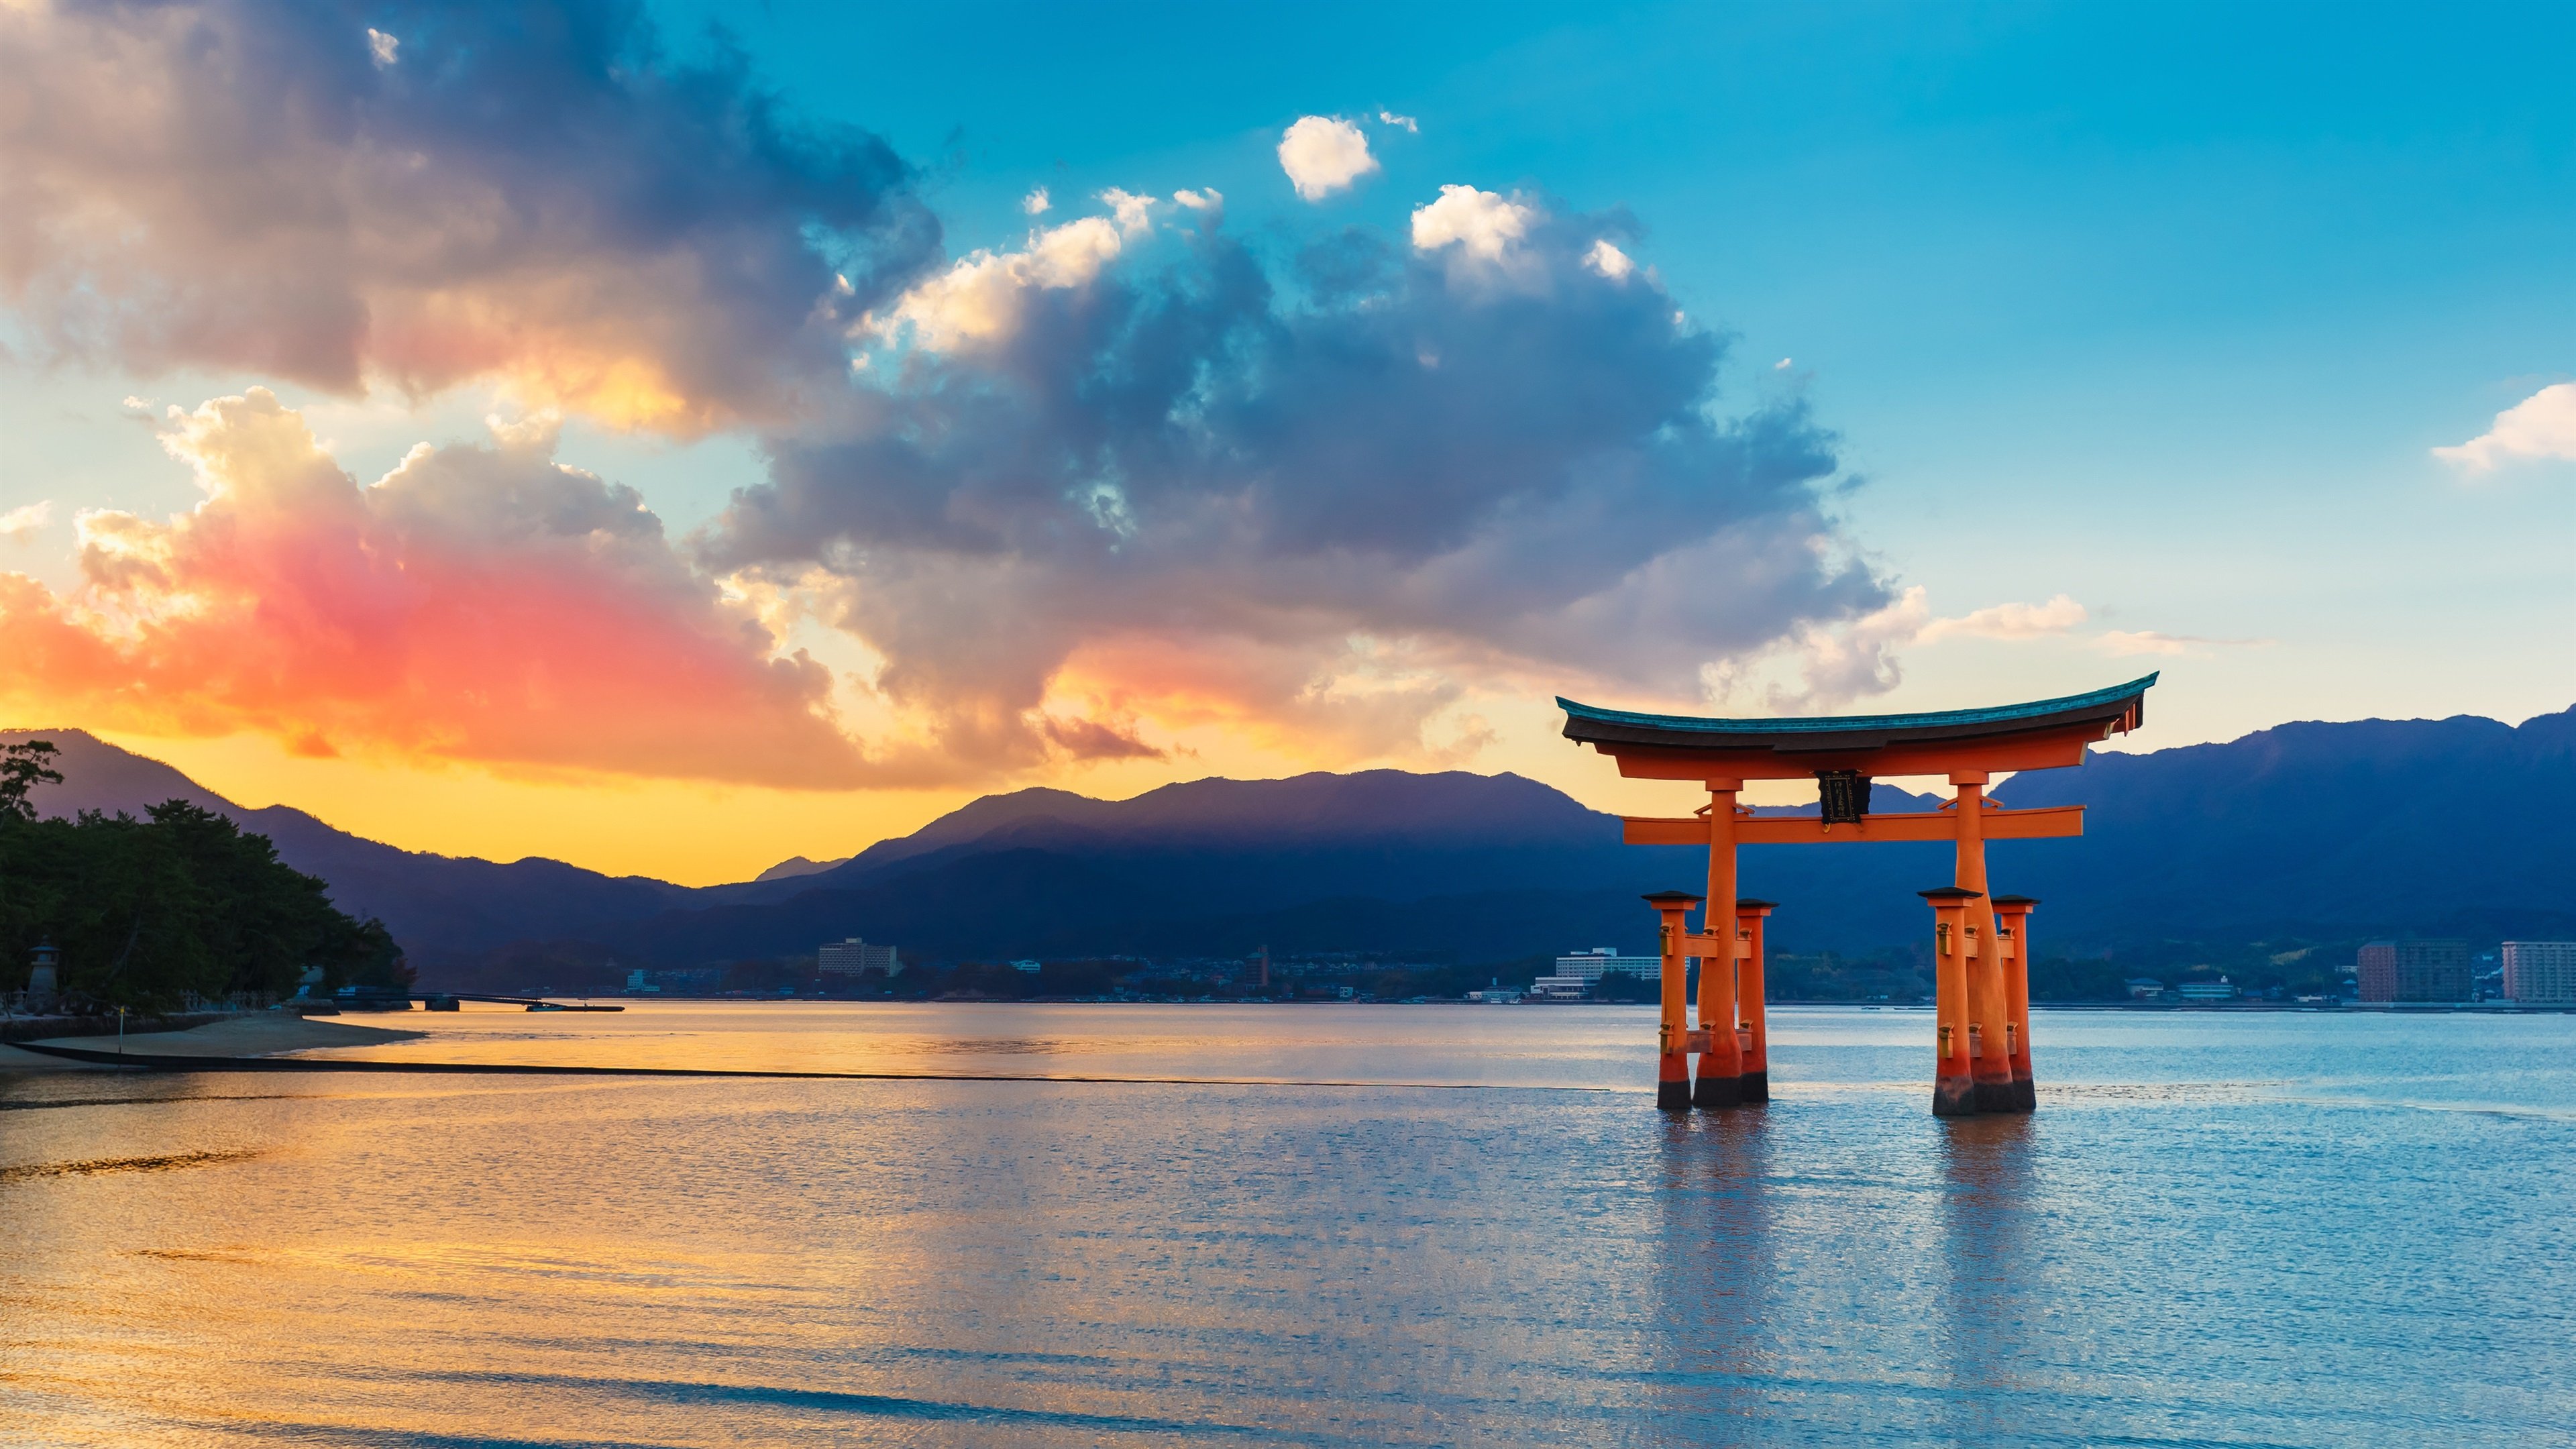 Wallpaper Torii Gate, sea, sunset, Japan 3840x2160 UHD 4K Picture, Image